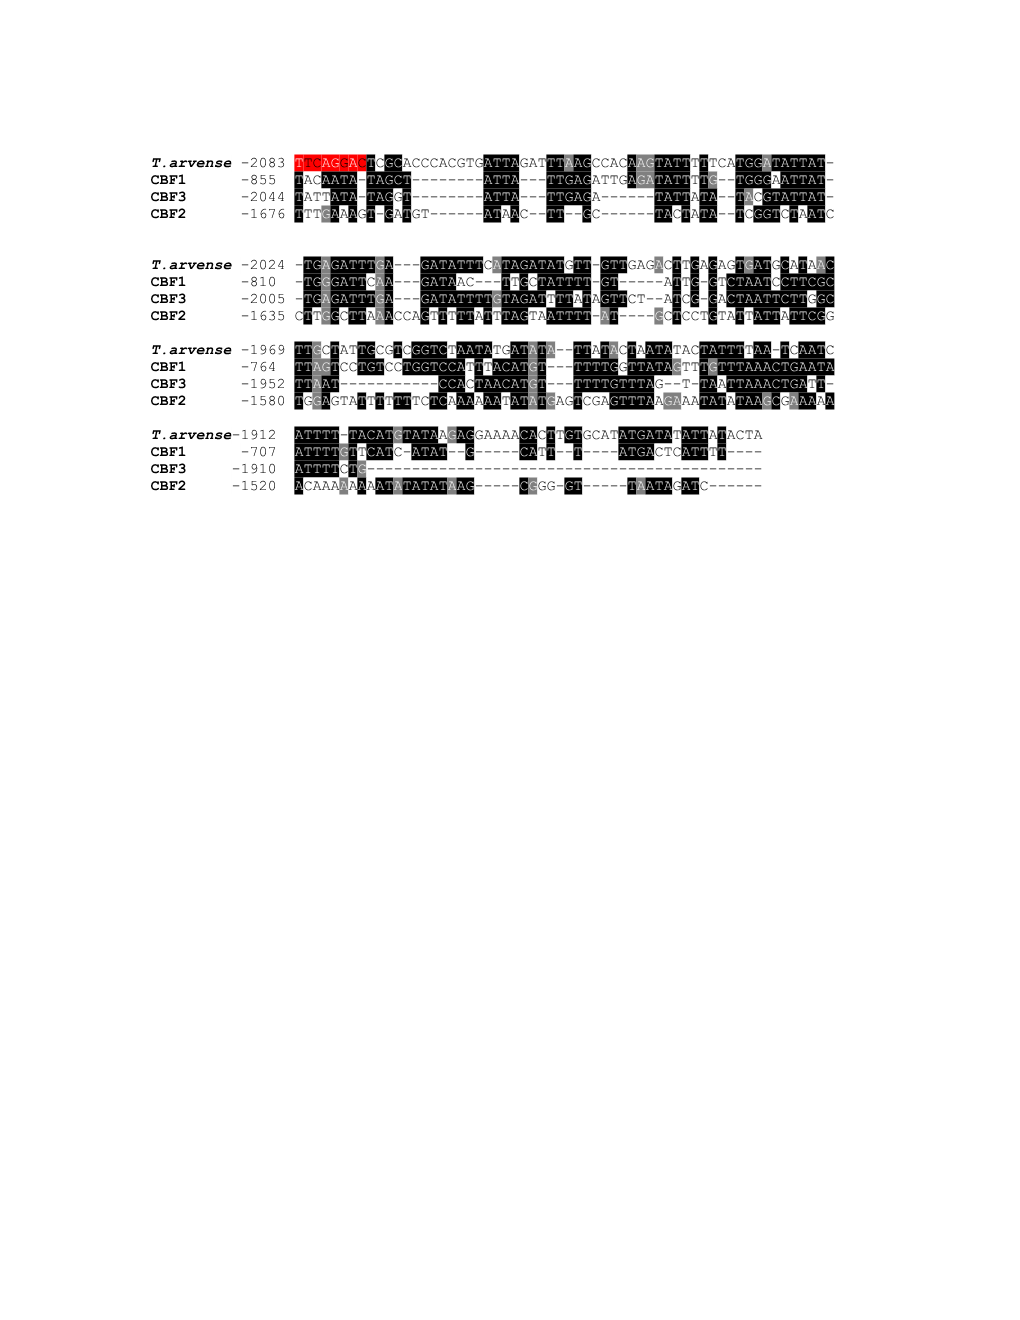 Figure 1. Comparison of Upstream Genomic Region of T. Arvense CBF with Arabidopsis CBF1